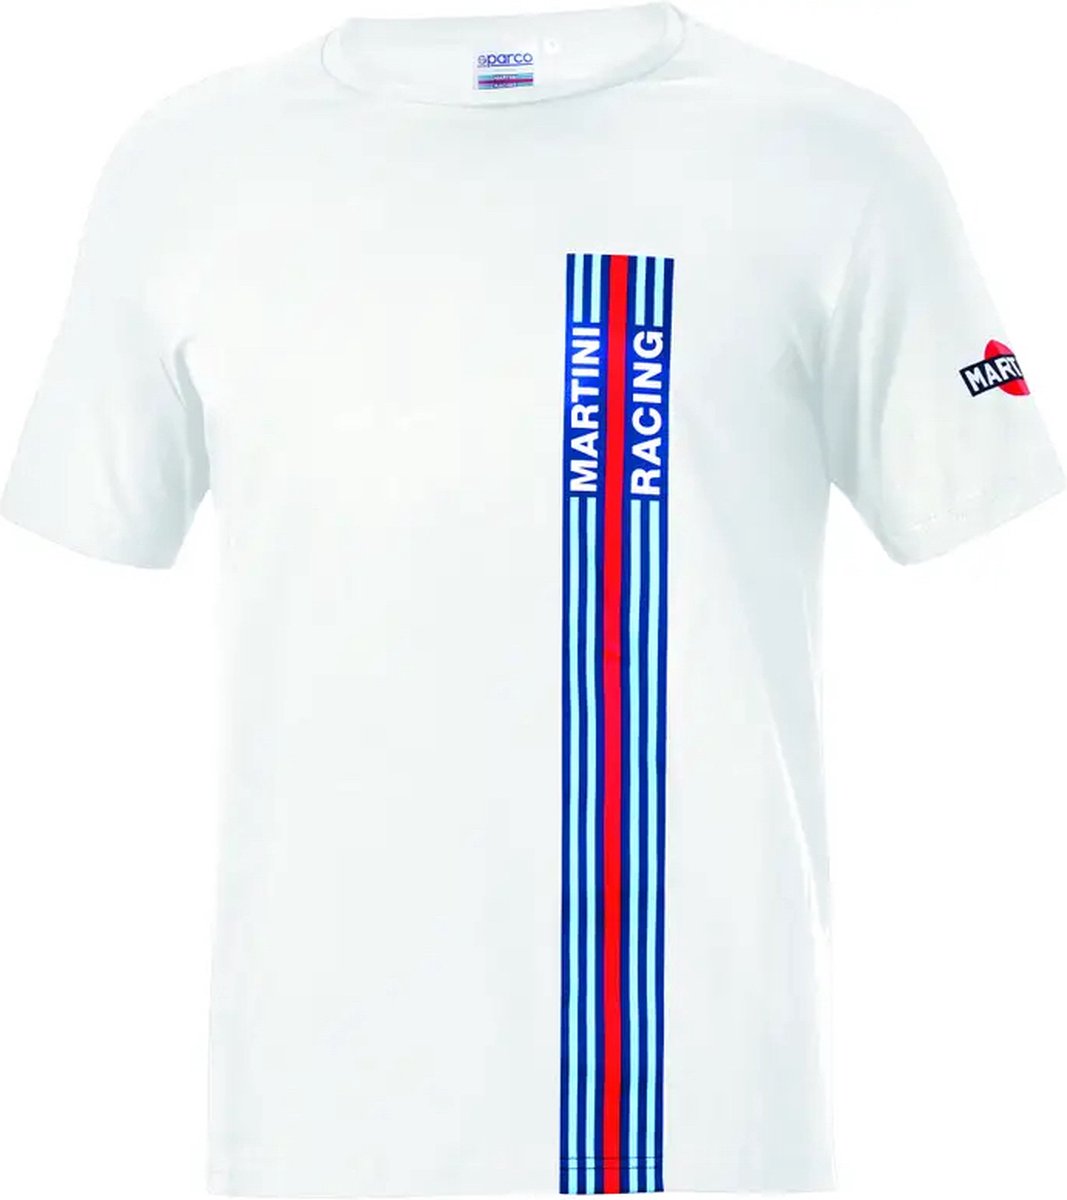 Sparco T-Shirt Big Stripes Martini Racing - Iconisch Italiaans T-shirt - Wit - Race T-shirt maat S